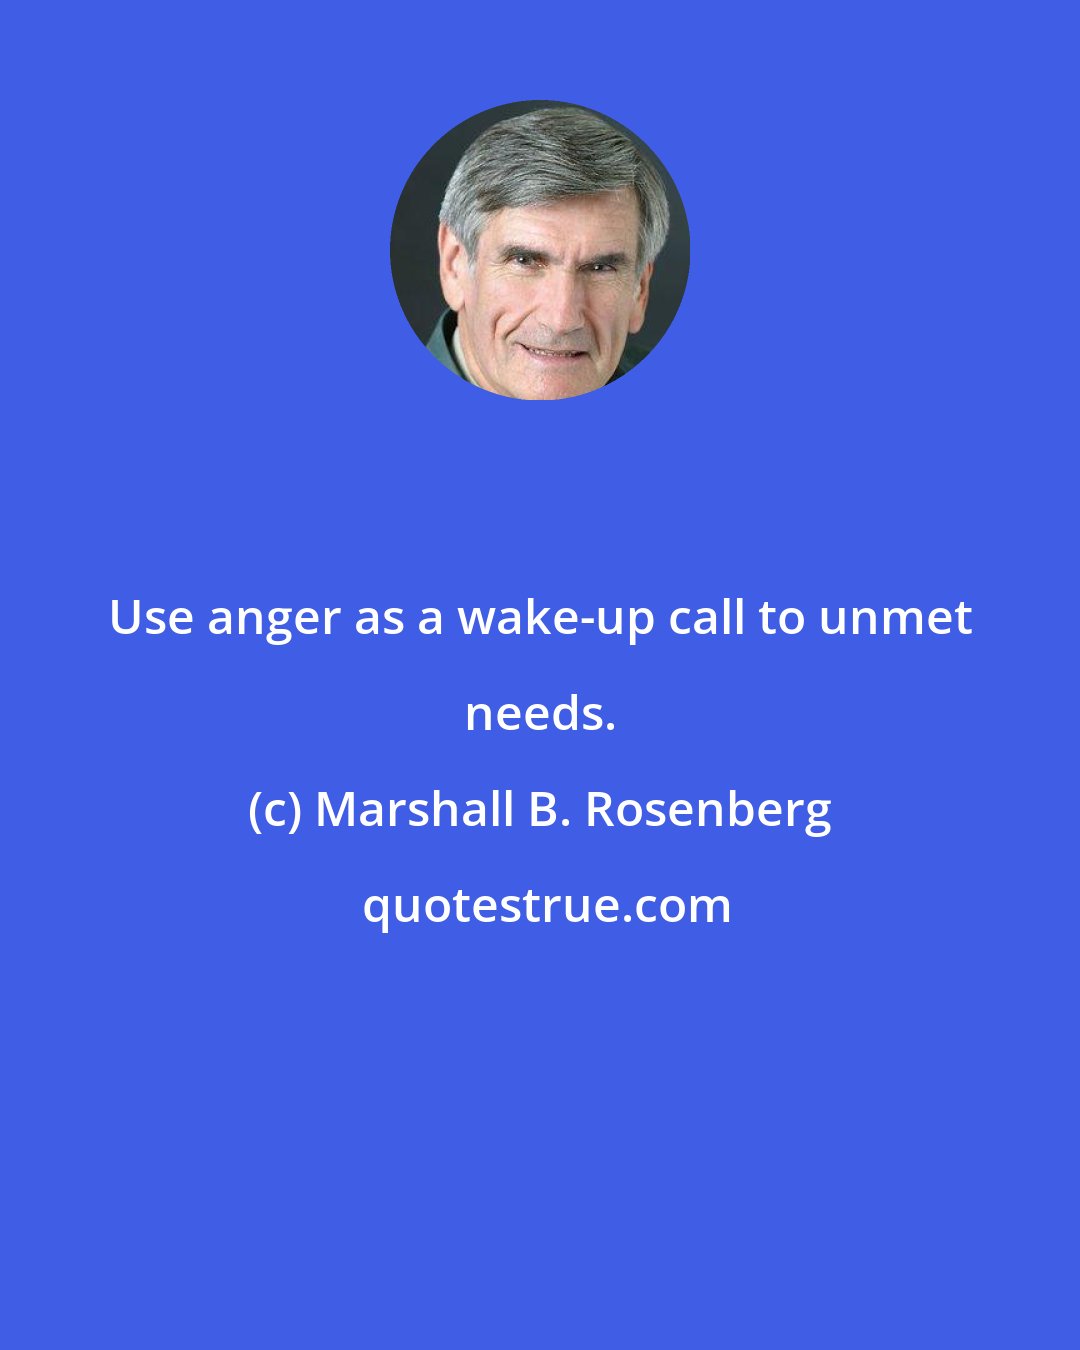 Marshall B. Rosenberg: Use anger as a wake-up call to unmet needs.